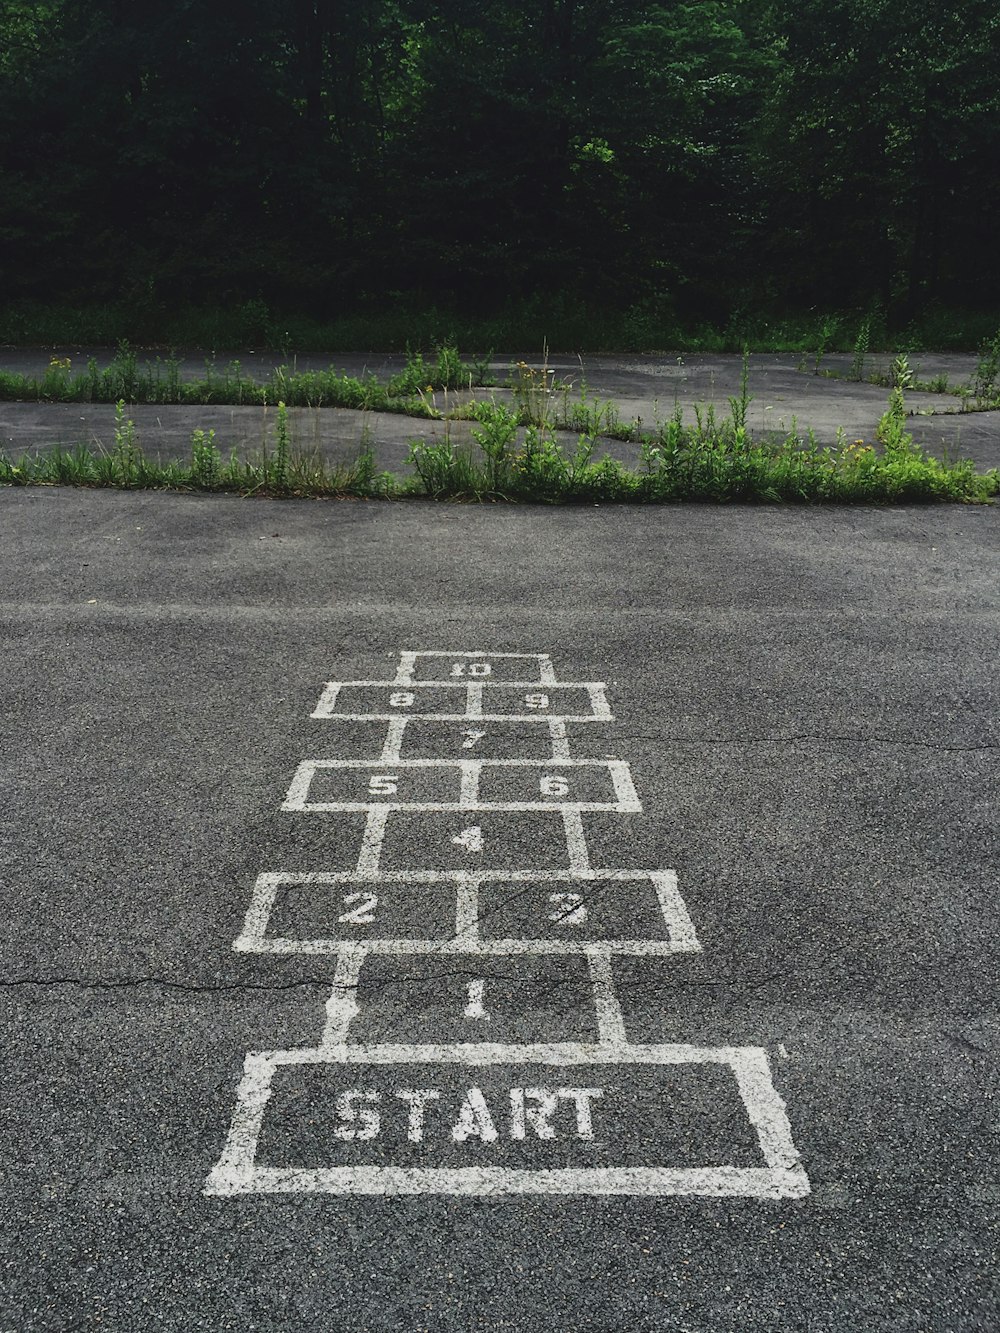 numbering start line on concrete floor